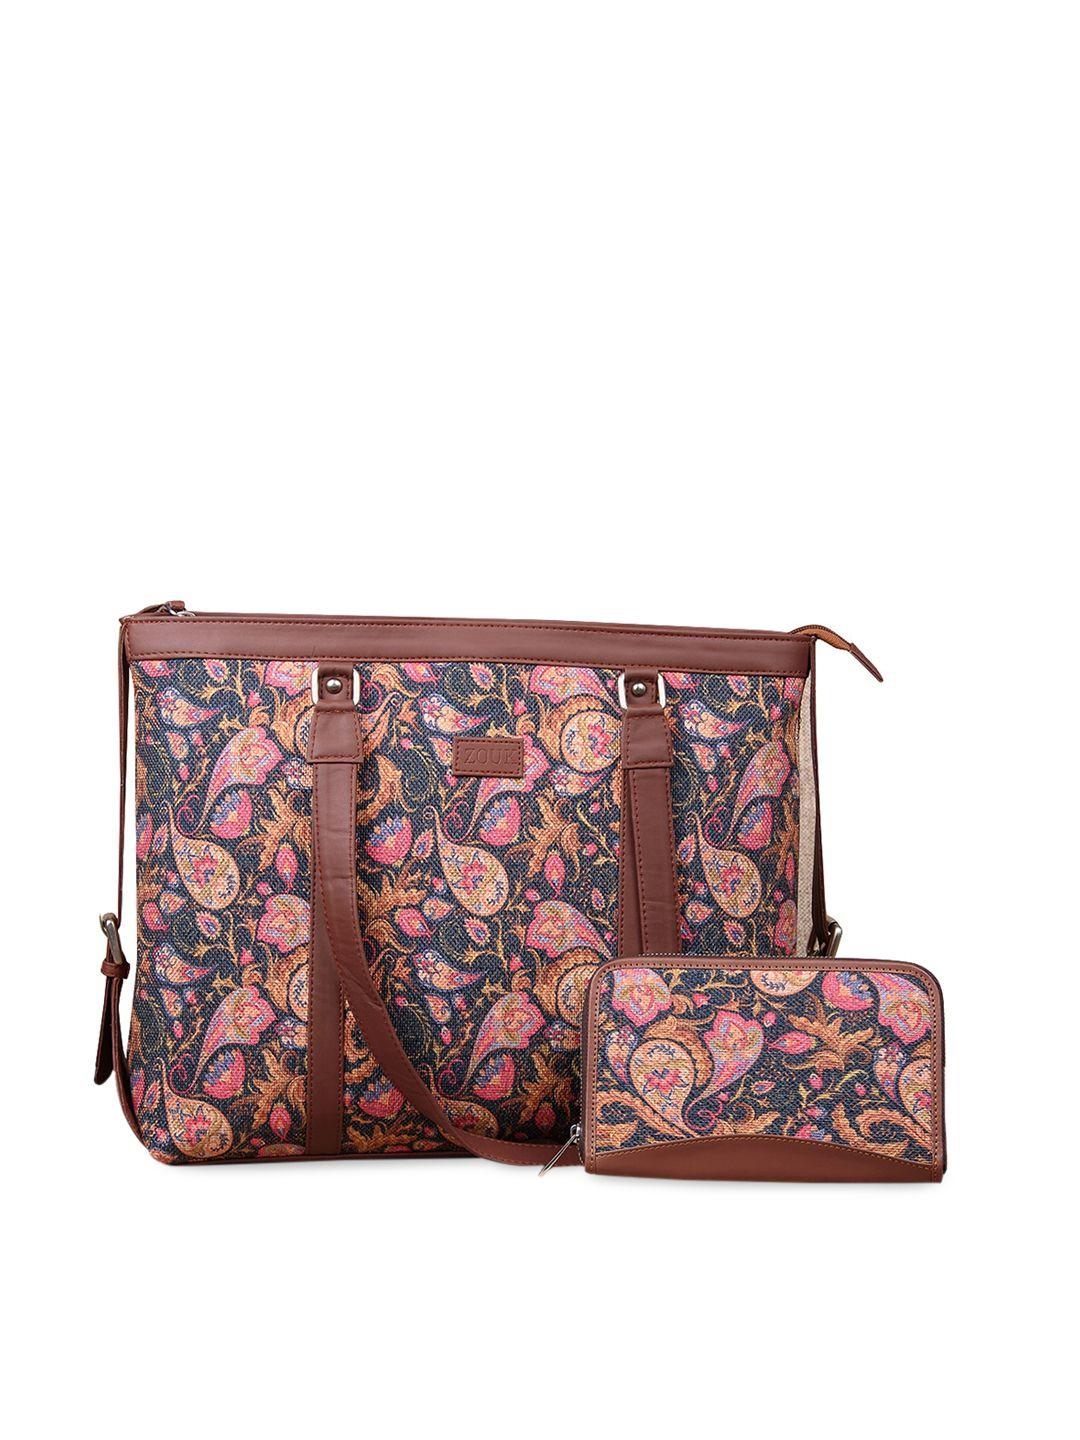 zouk pink floral printed structured shoulder bag and wallet combo